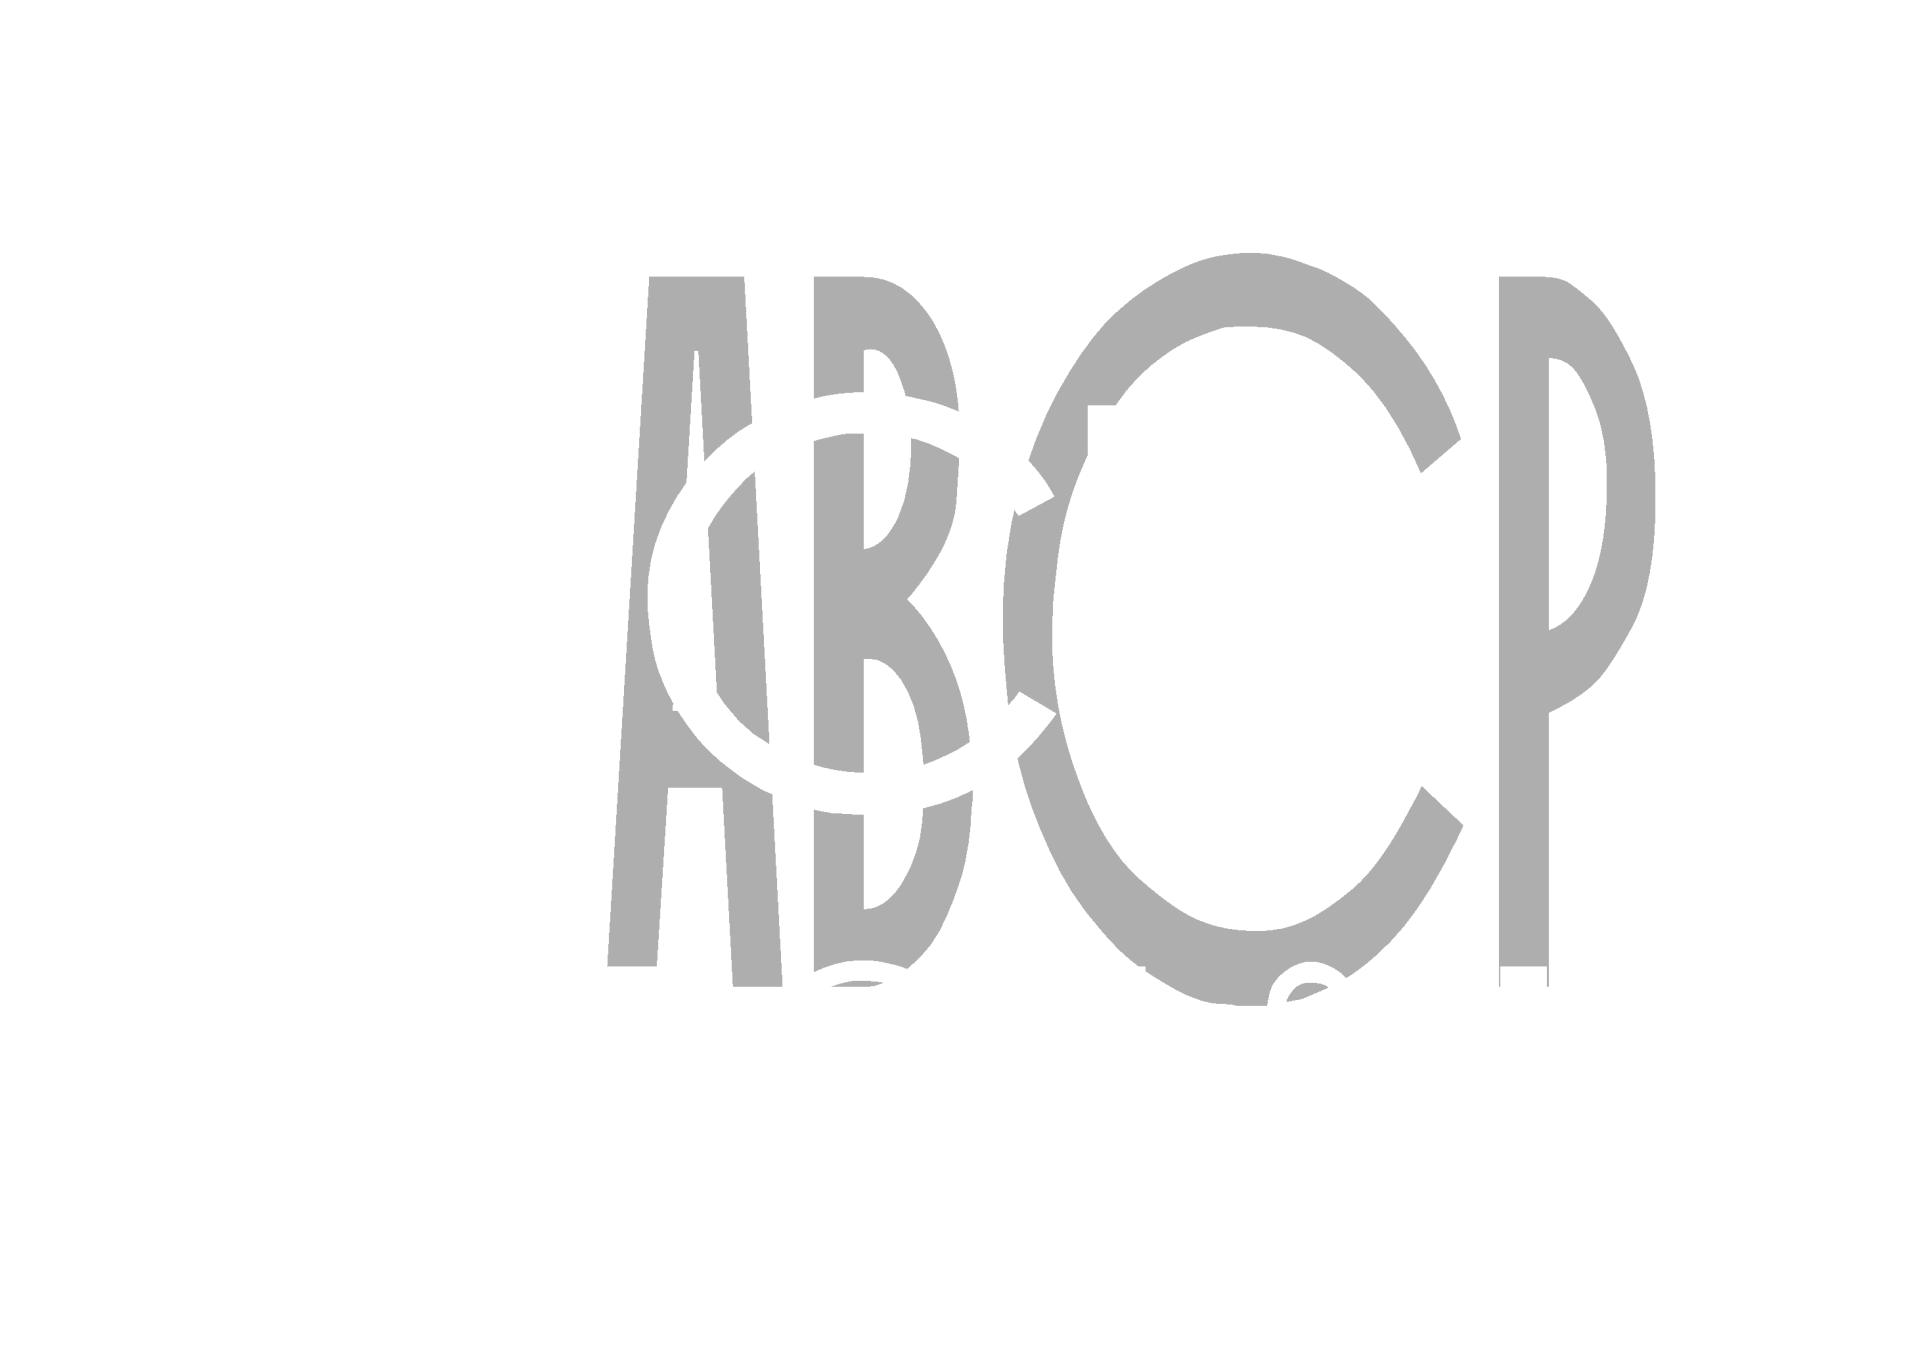 ABCP Spectacles & Fêtes